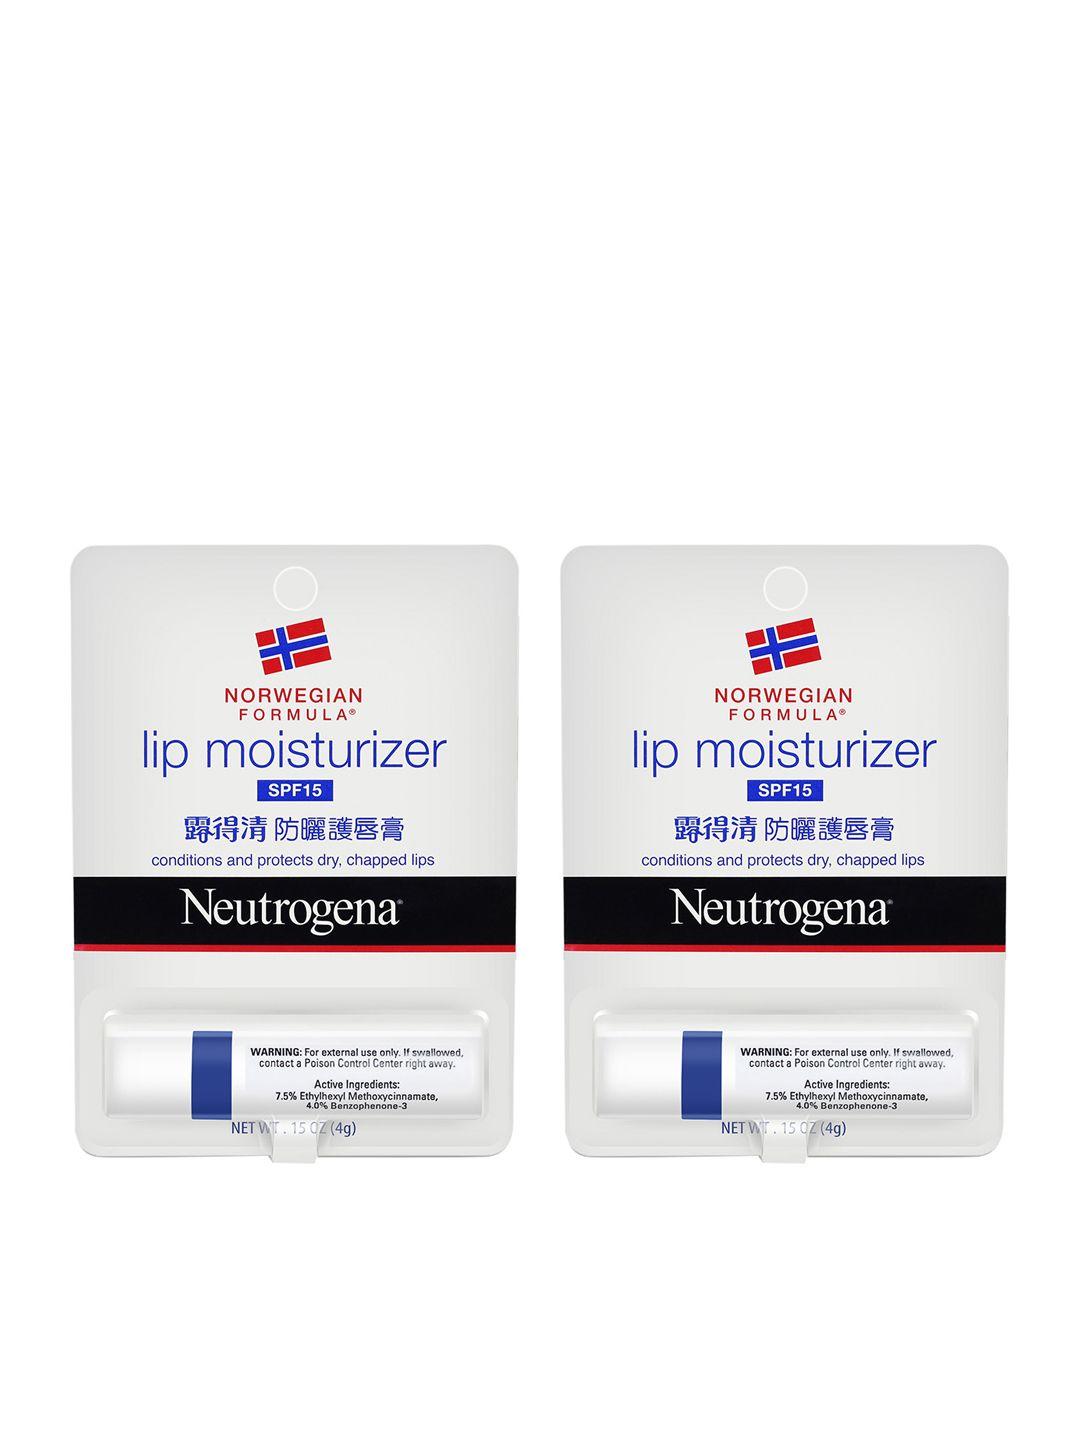 neutrogena set of 2 norwegian formula spf 15 lip moisturiser 4 g each